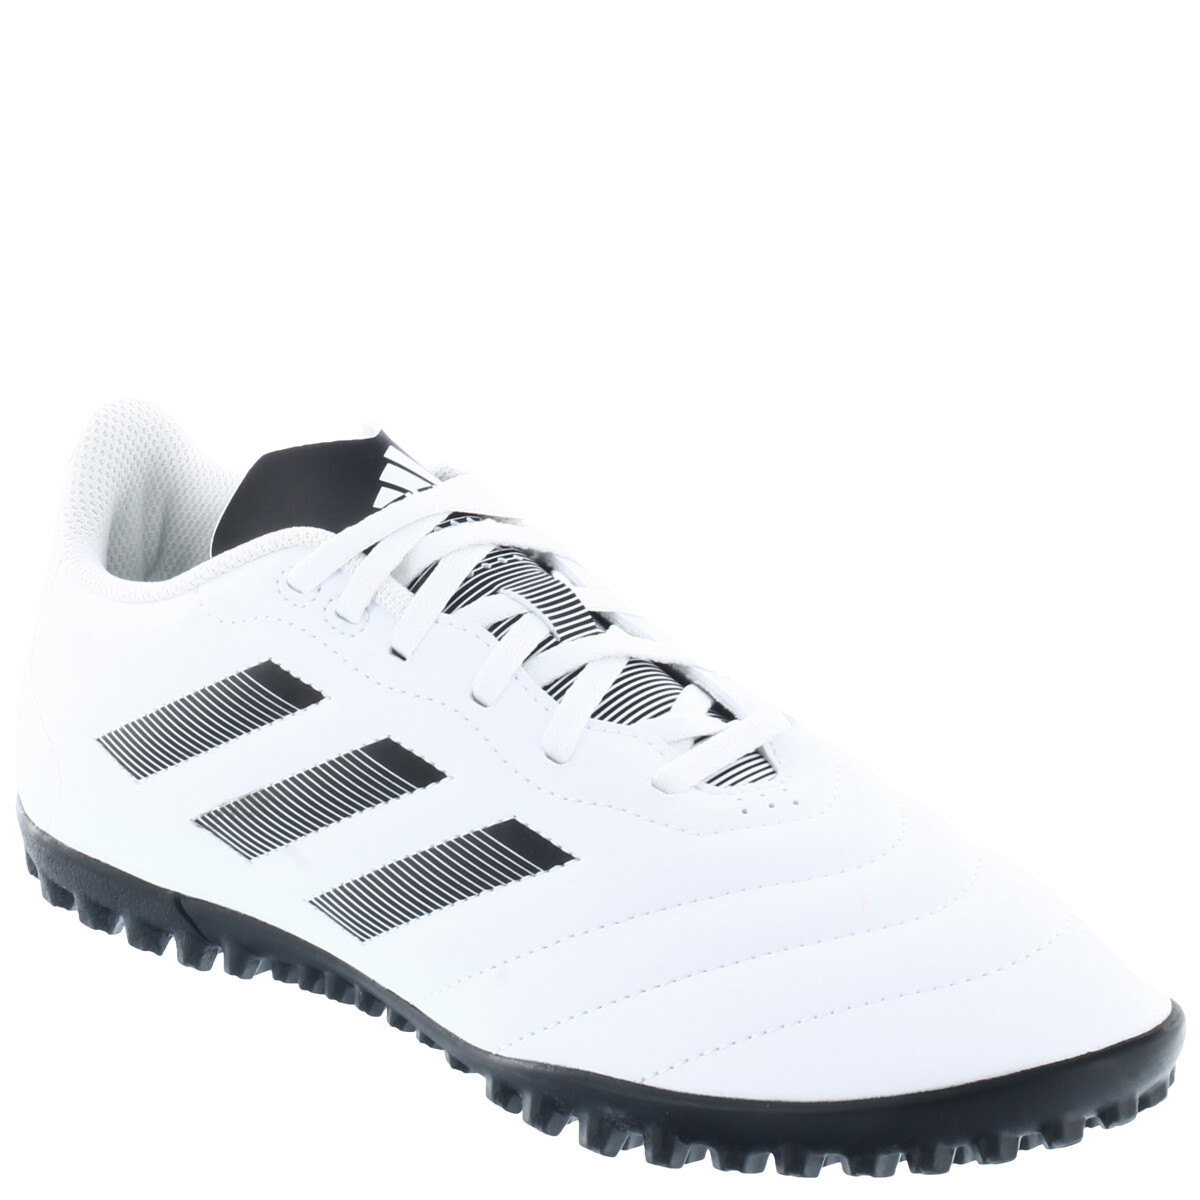 Futbol 5 Goletto VIII Adidas - Blanco/Negro 